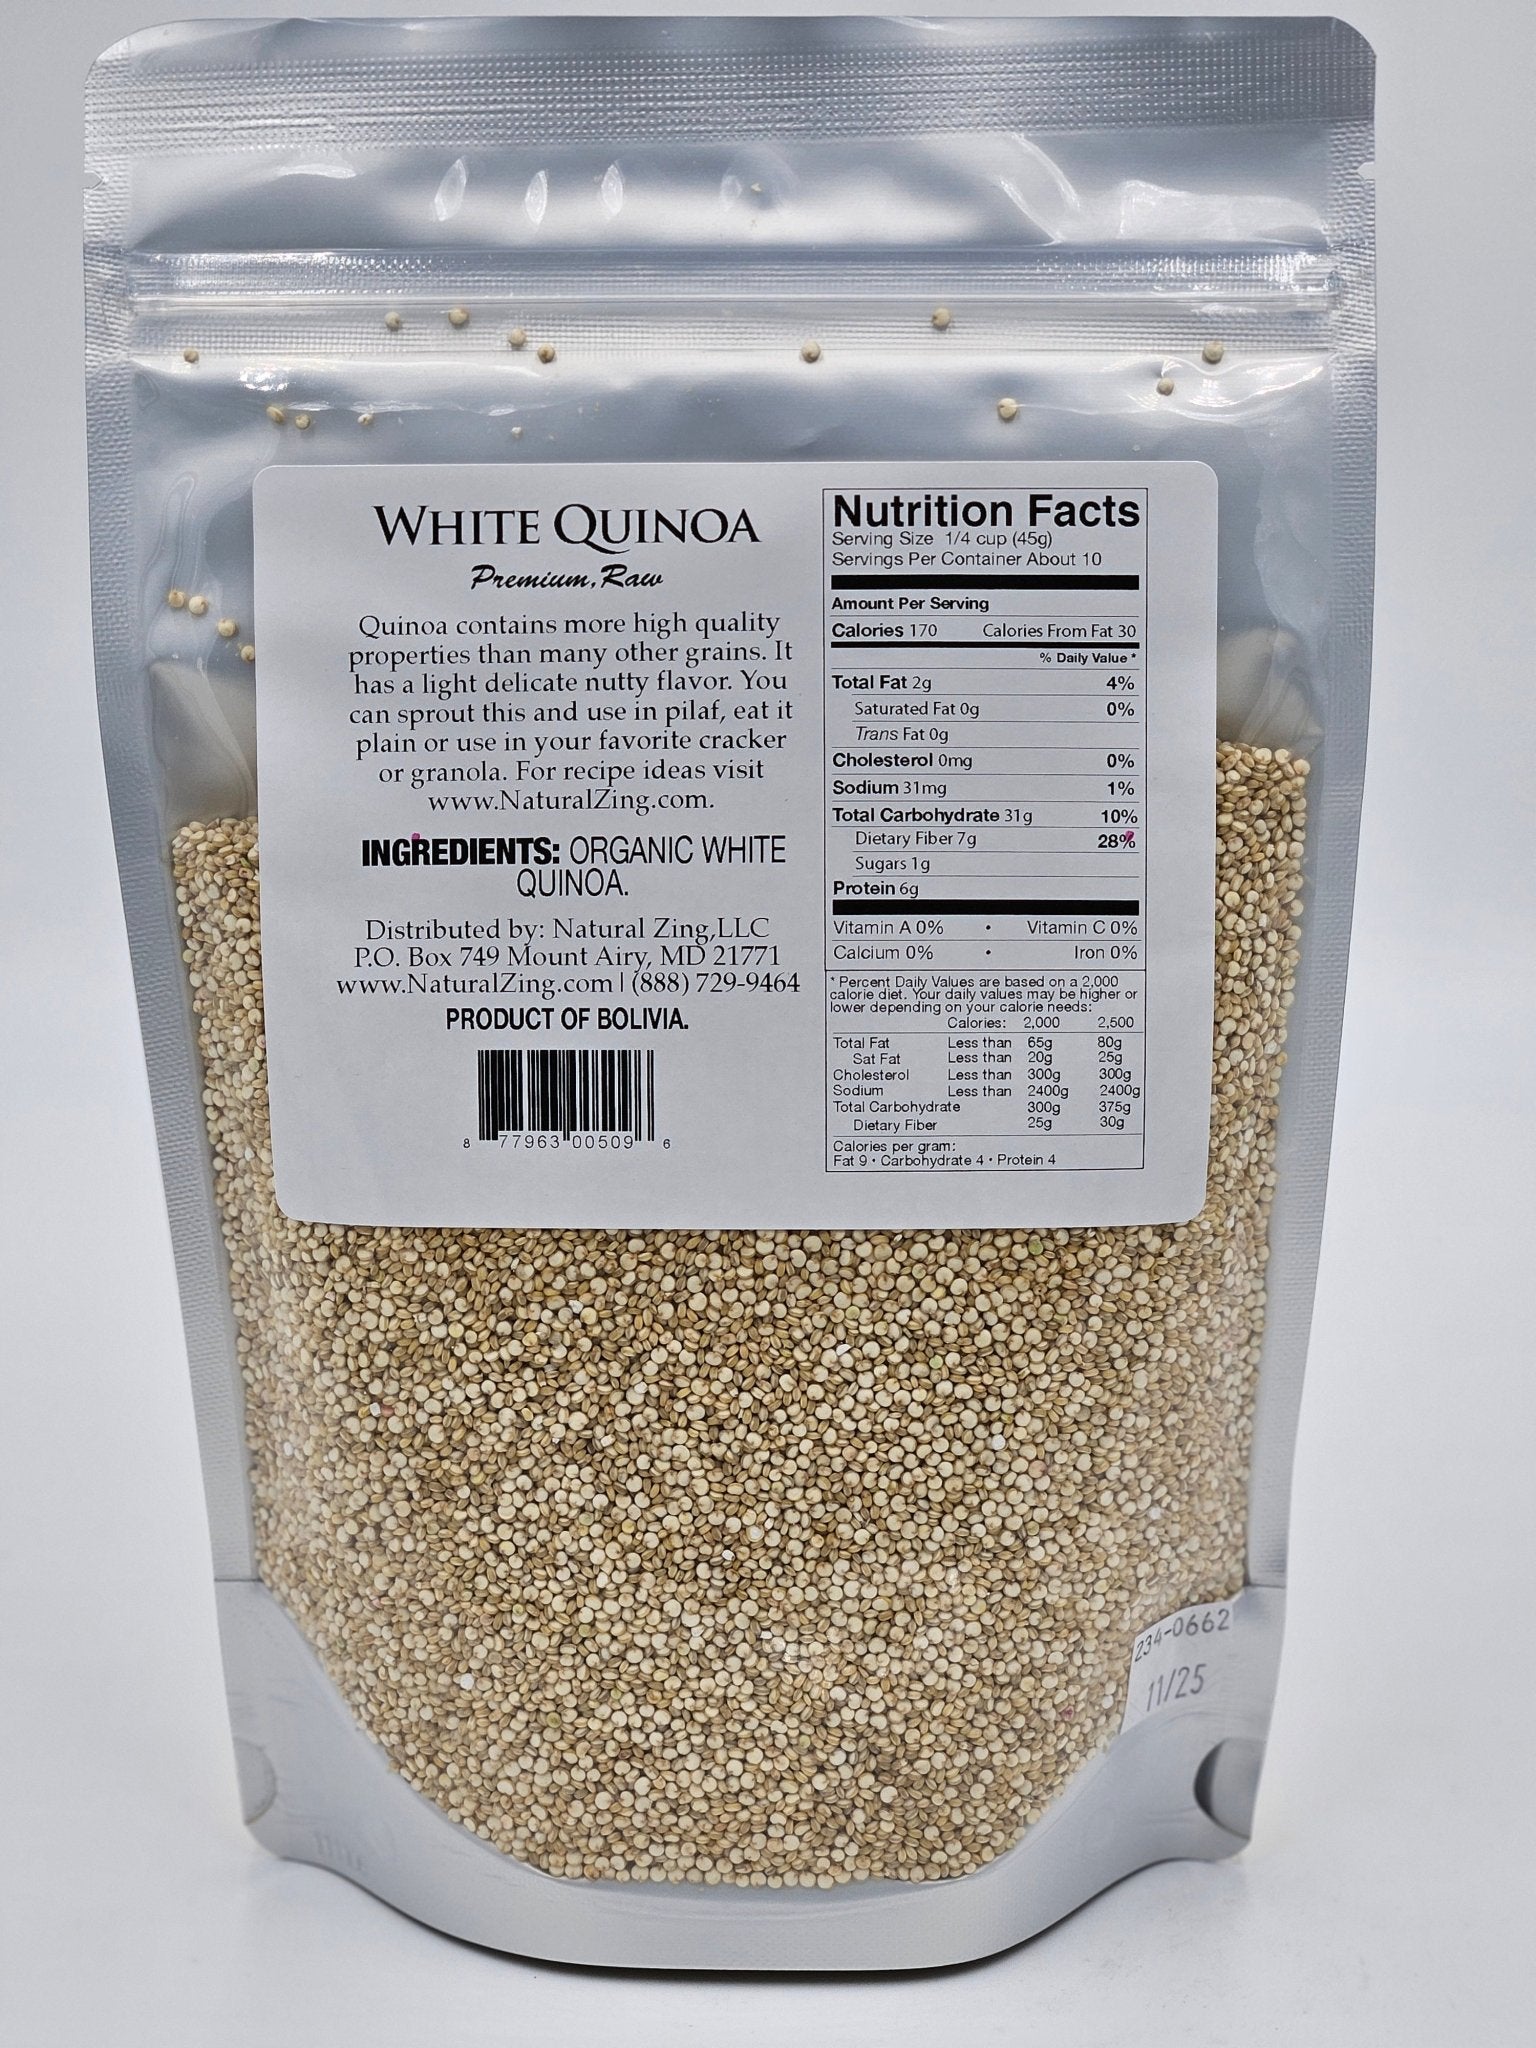 ***【3 pack】-White Quinoa 16 oz - Natural Zing